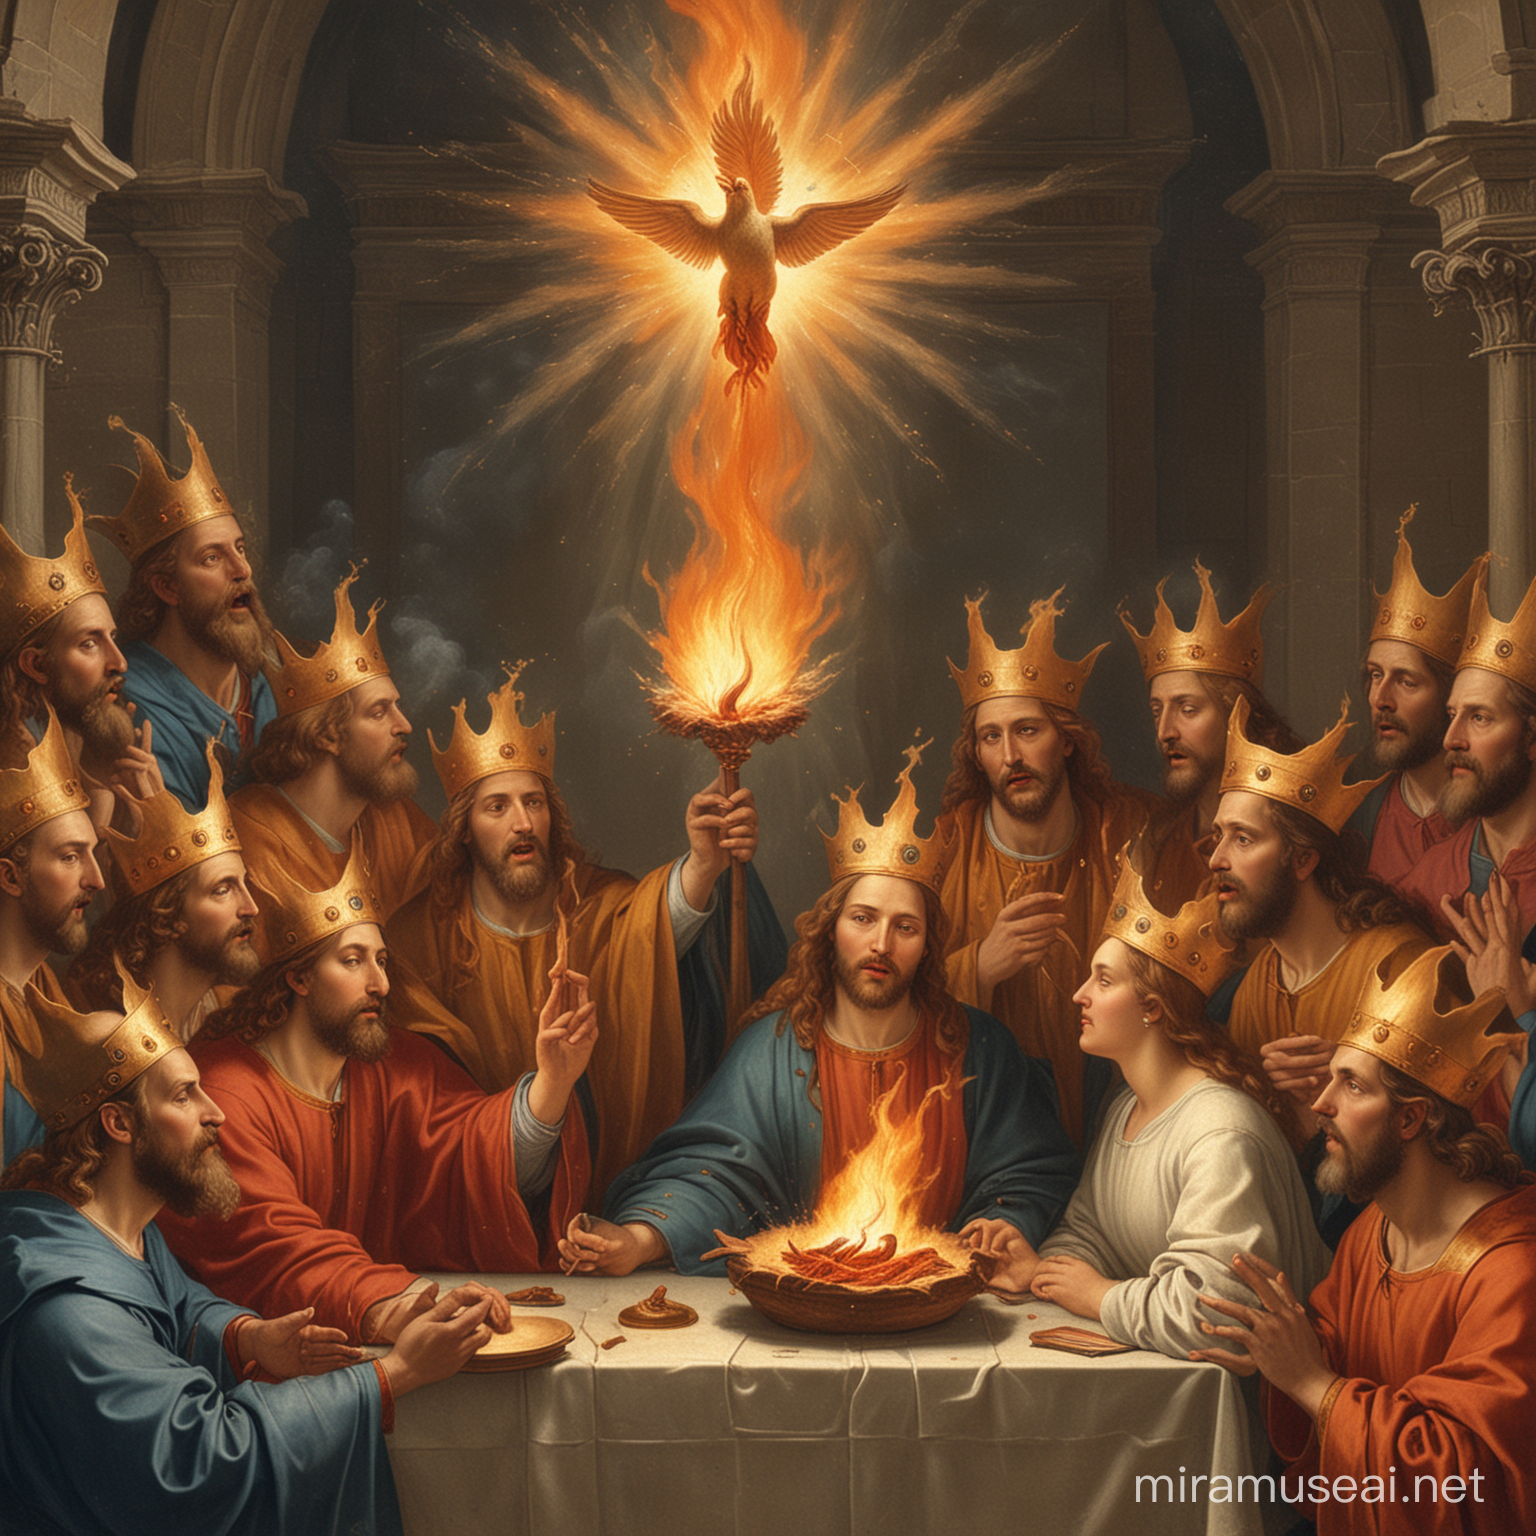 Renaissance Era Pentecost Scene with Ember Flame